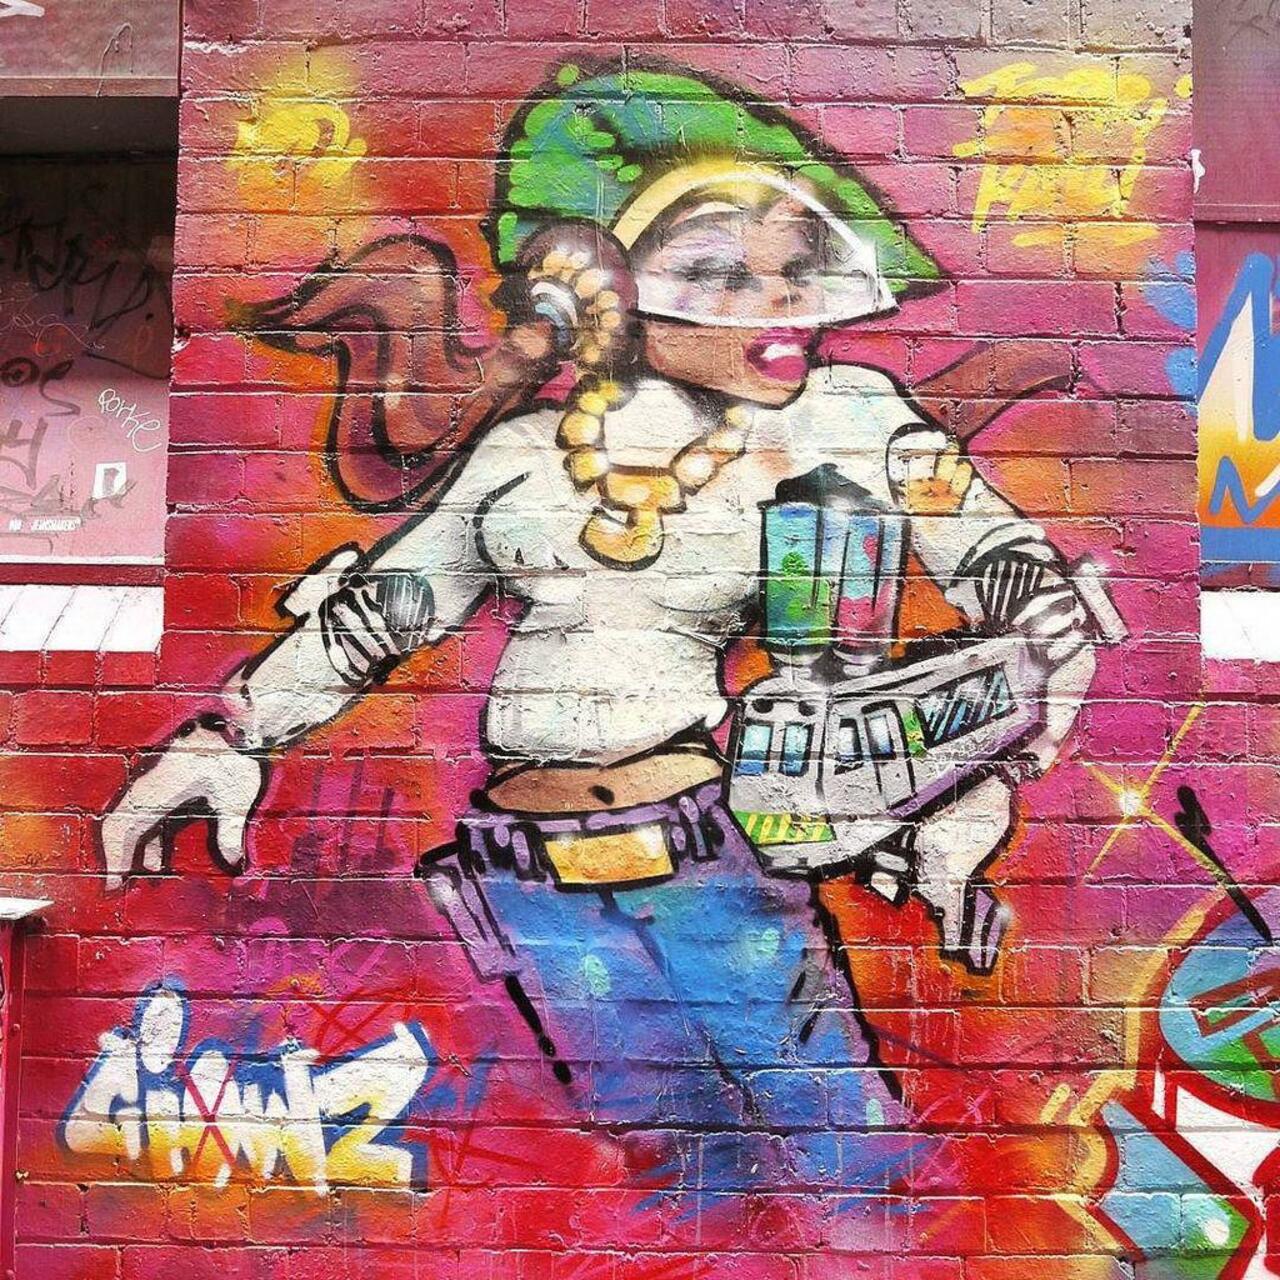 #streetart #urbanart #graffiti #graff #streetartmelbourne #streetartofficial #instagraffiti #melbourne #urbanex #ur… http://t.co/NmrUIAVoDt